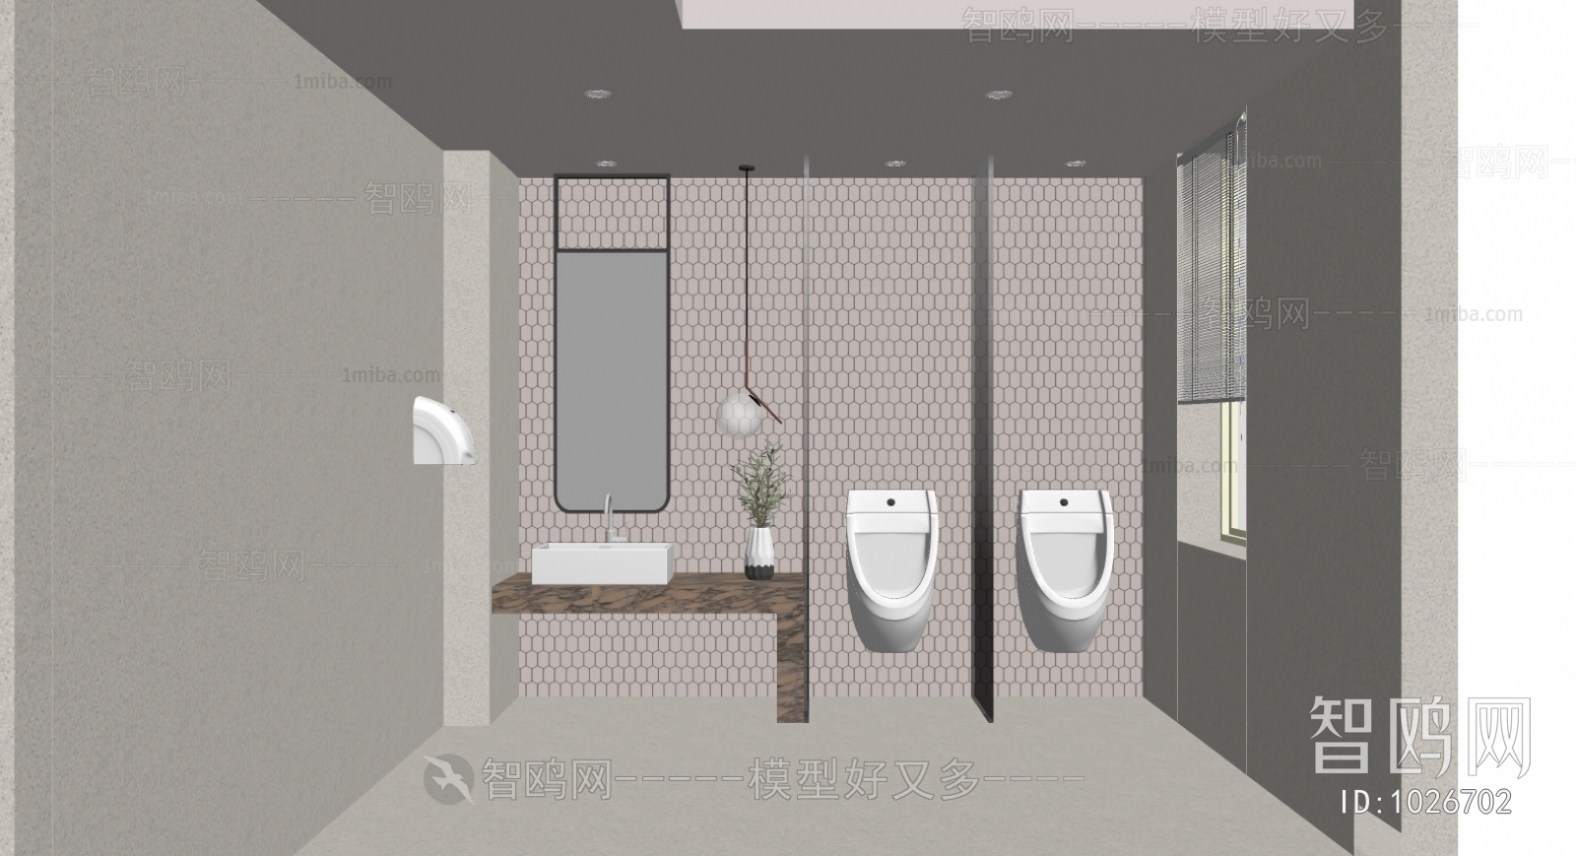 Modern Public Toilet